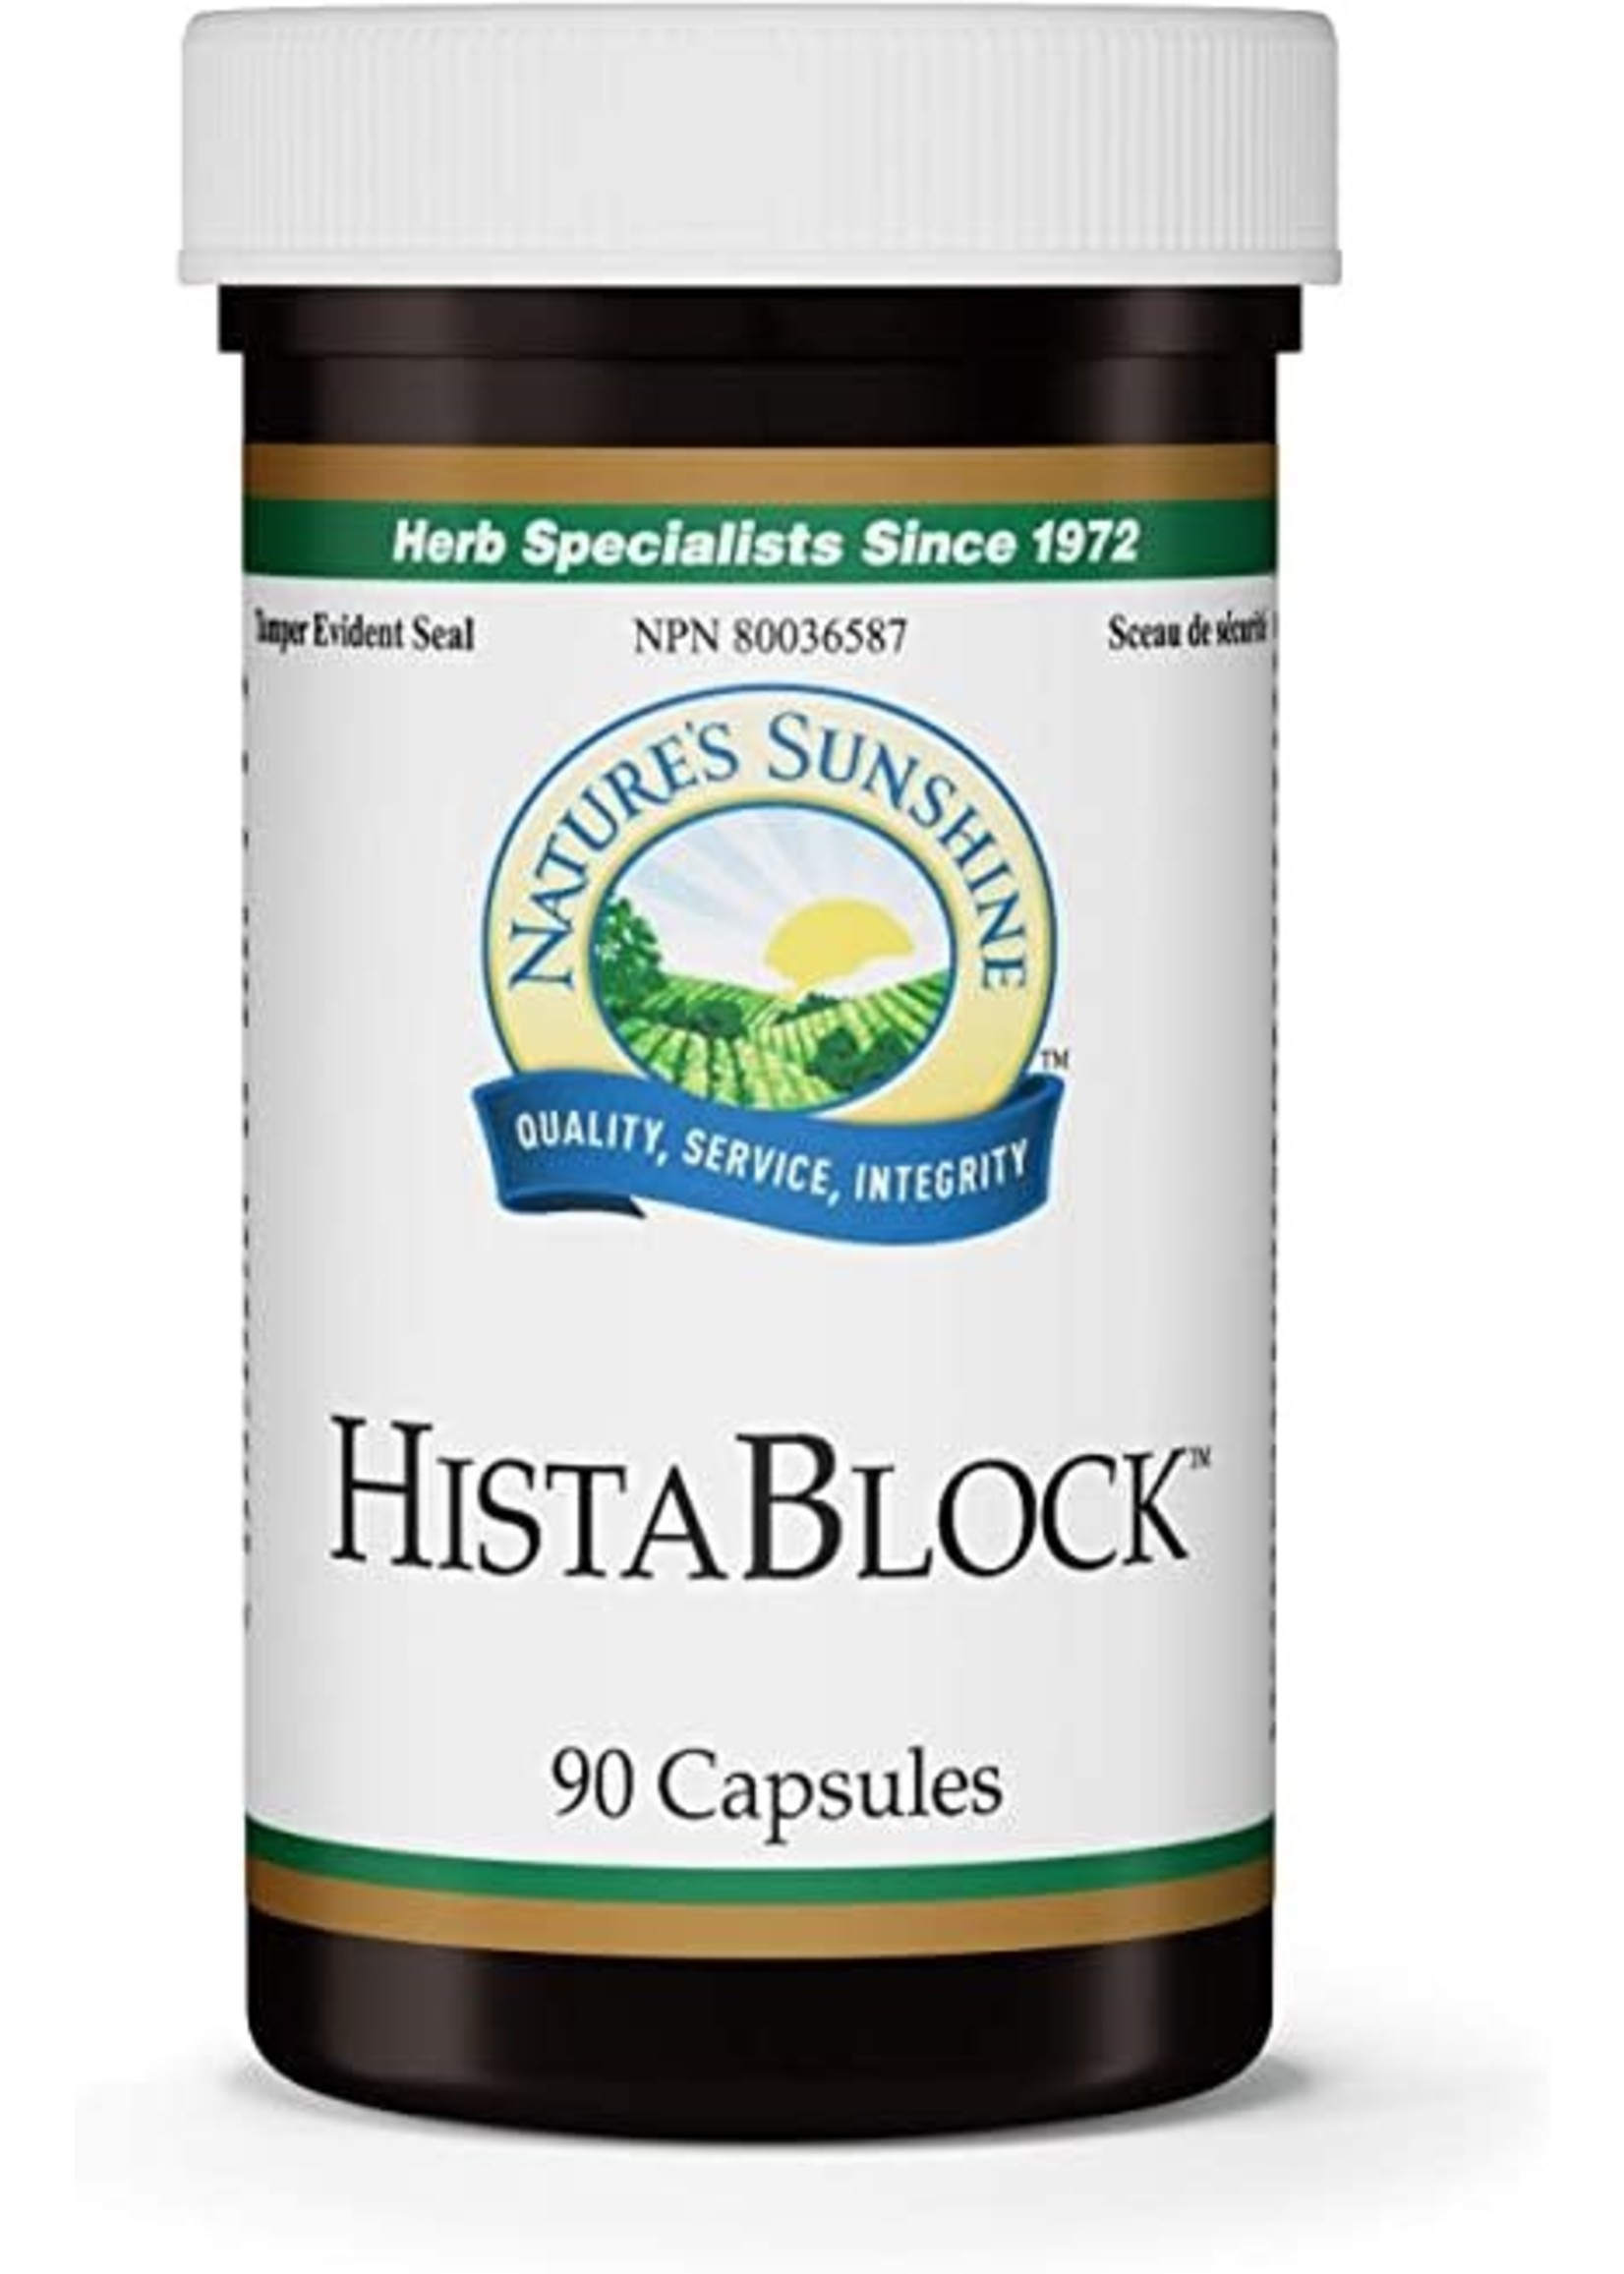 Nature's Sunshine NS - HistaBlock (90caps)